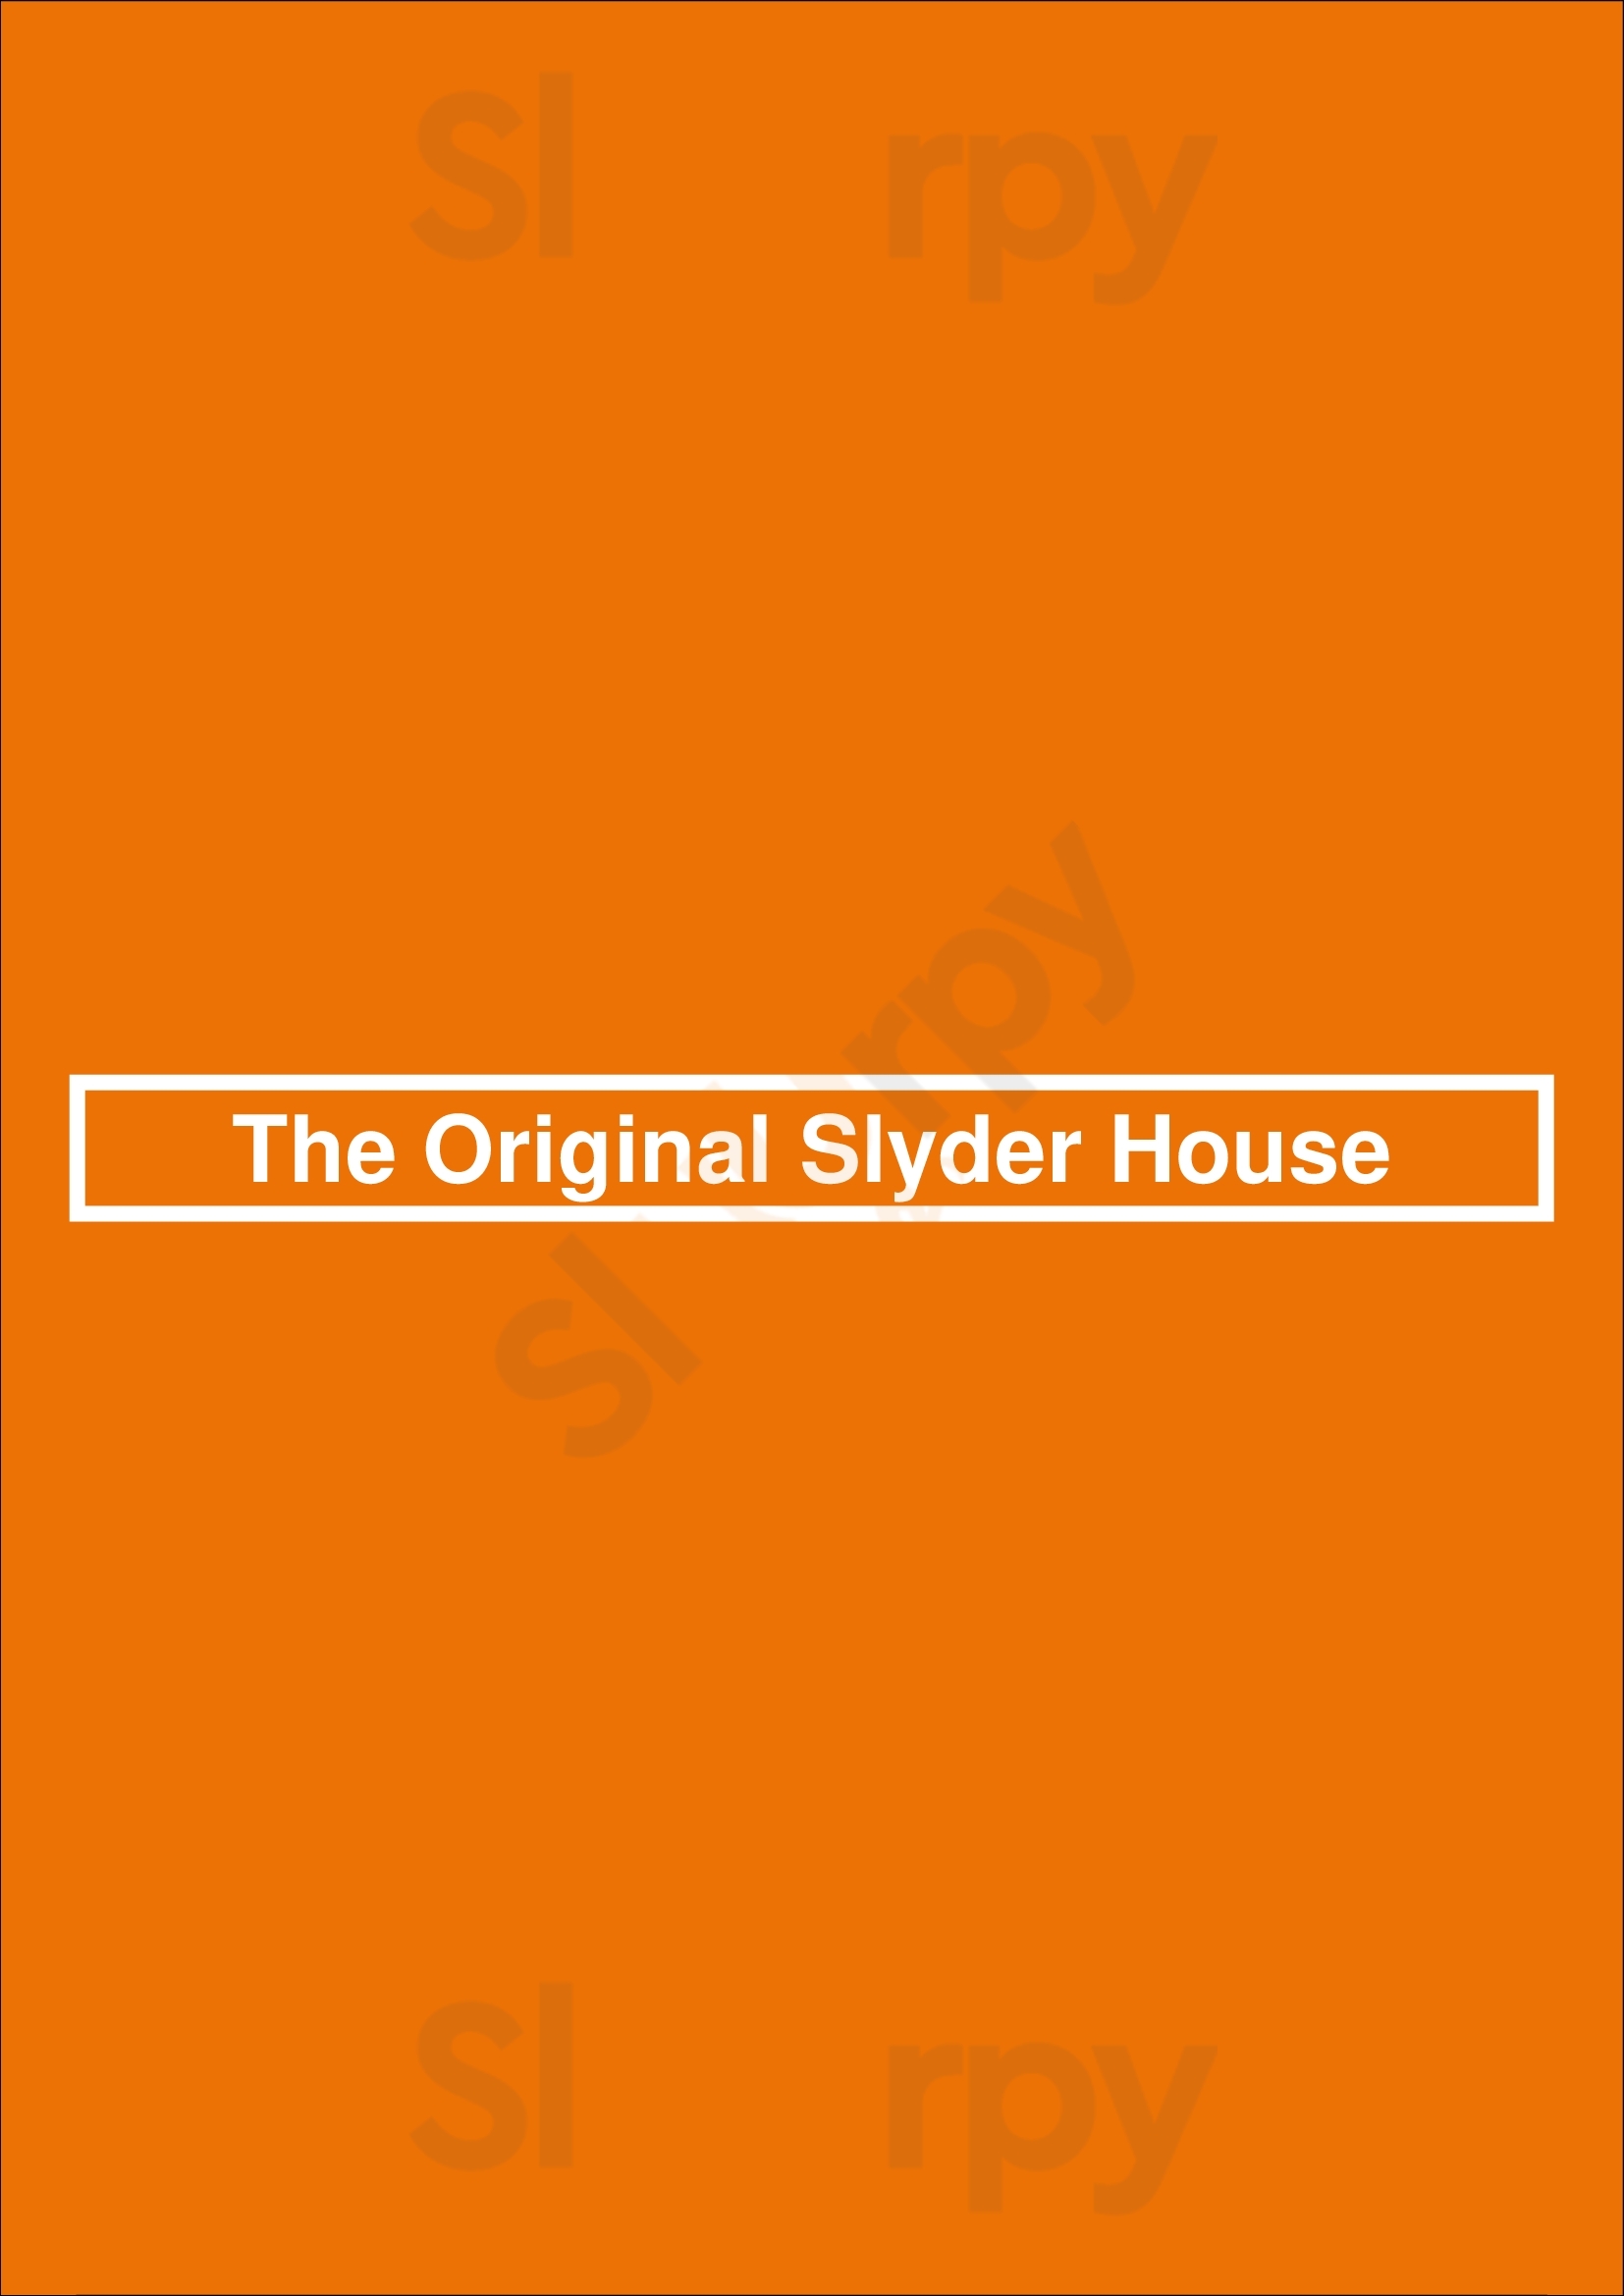 The Original Slyder House Glendale Menu - 1